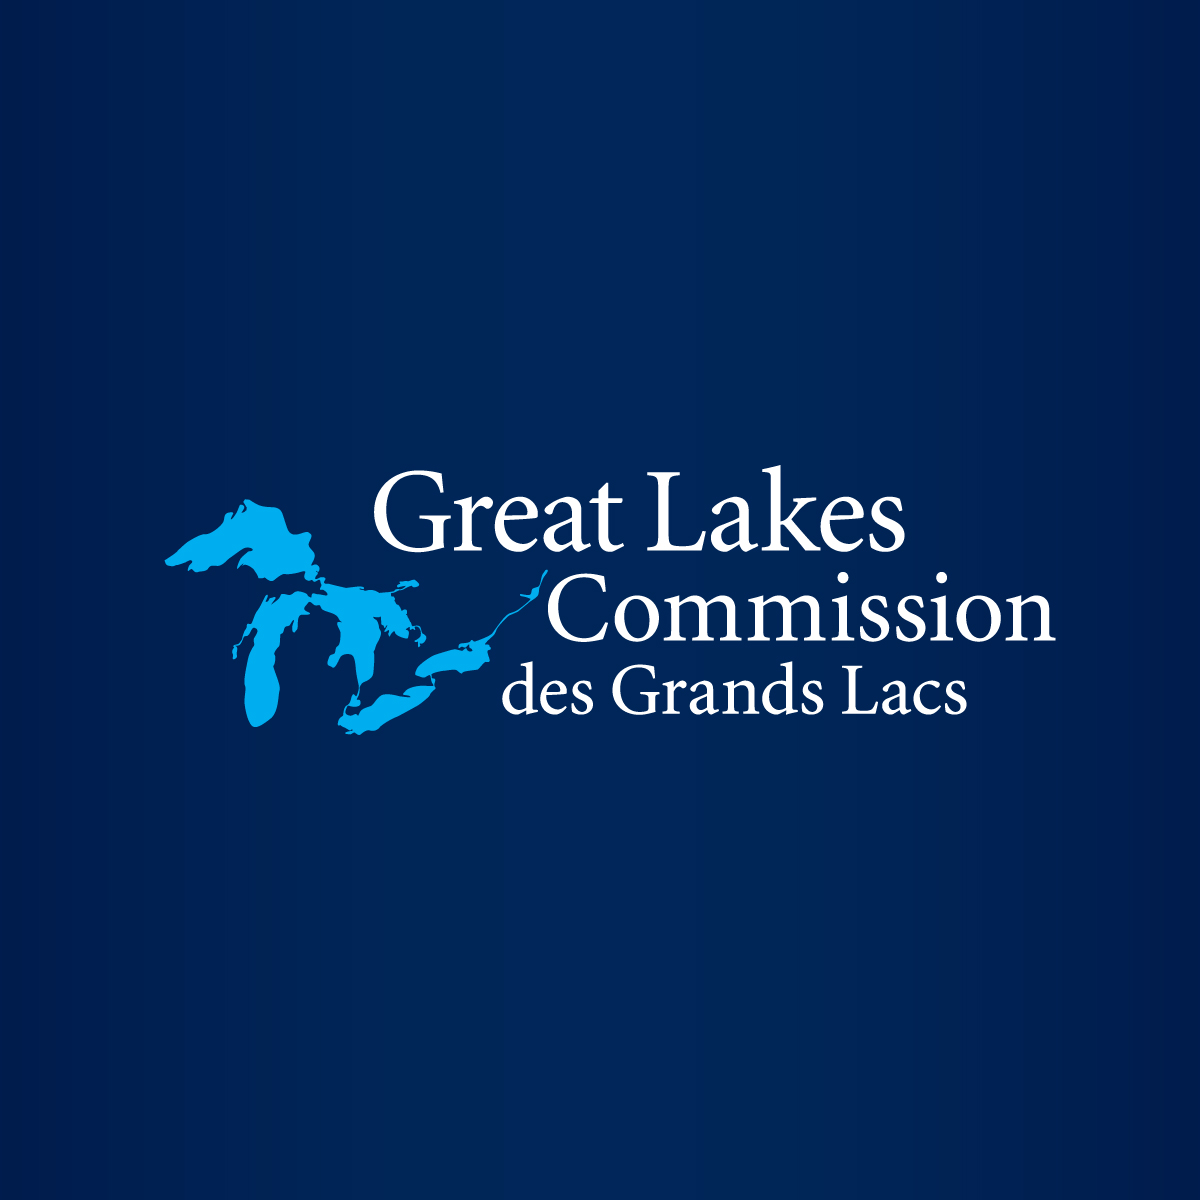 Grand Portage Band acquires historic Lake Superior beach near Grand Marais